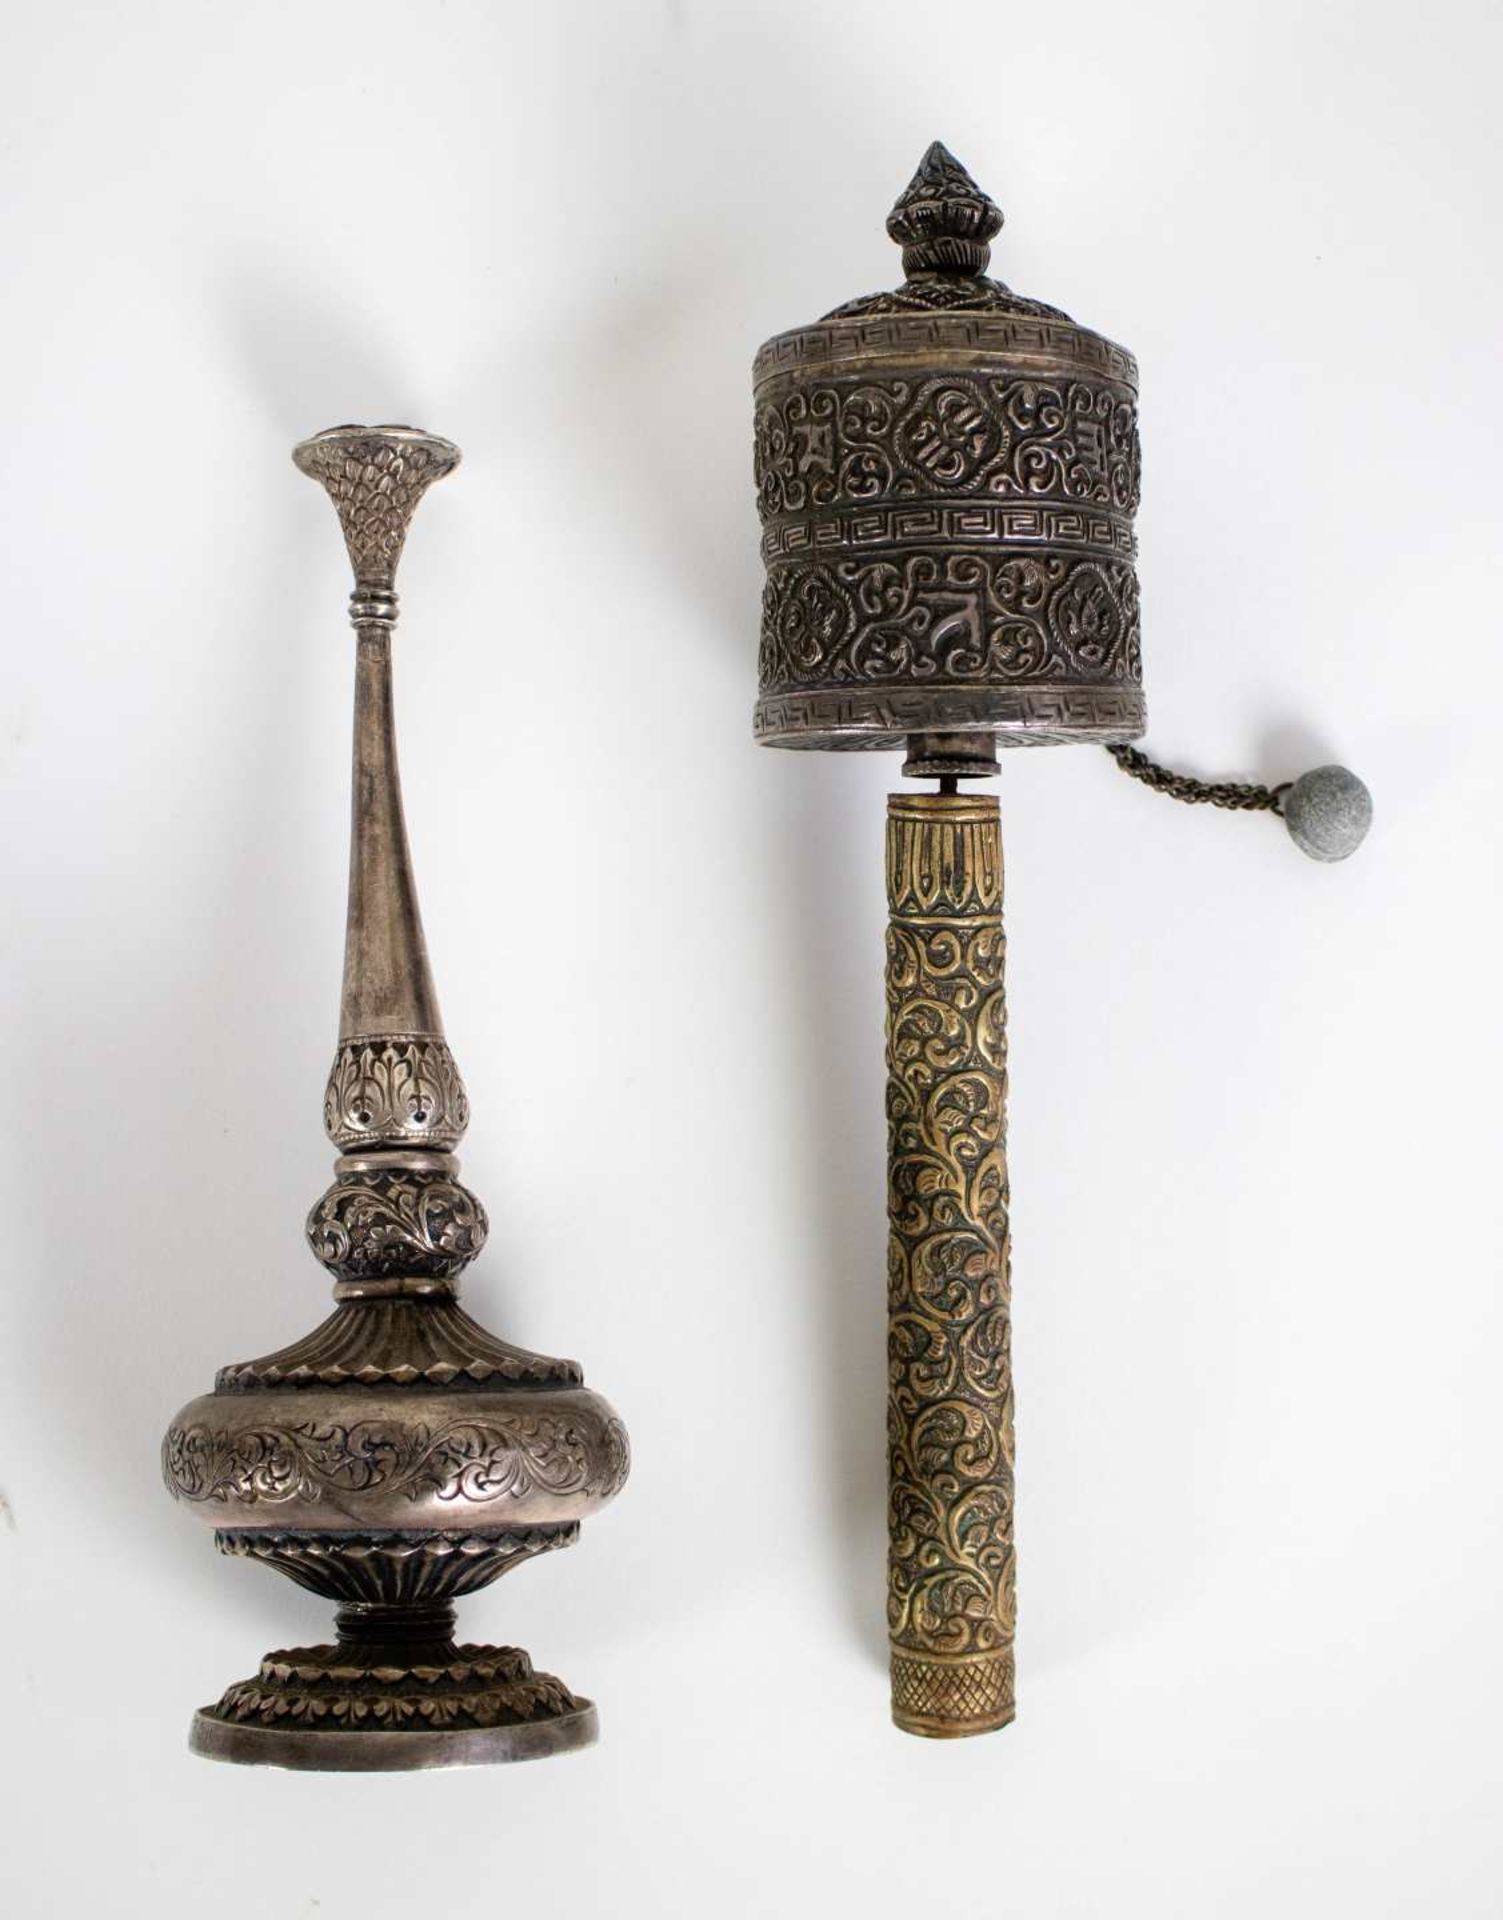 Silver rose water bottle and Tibetan prayer wheel